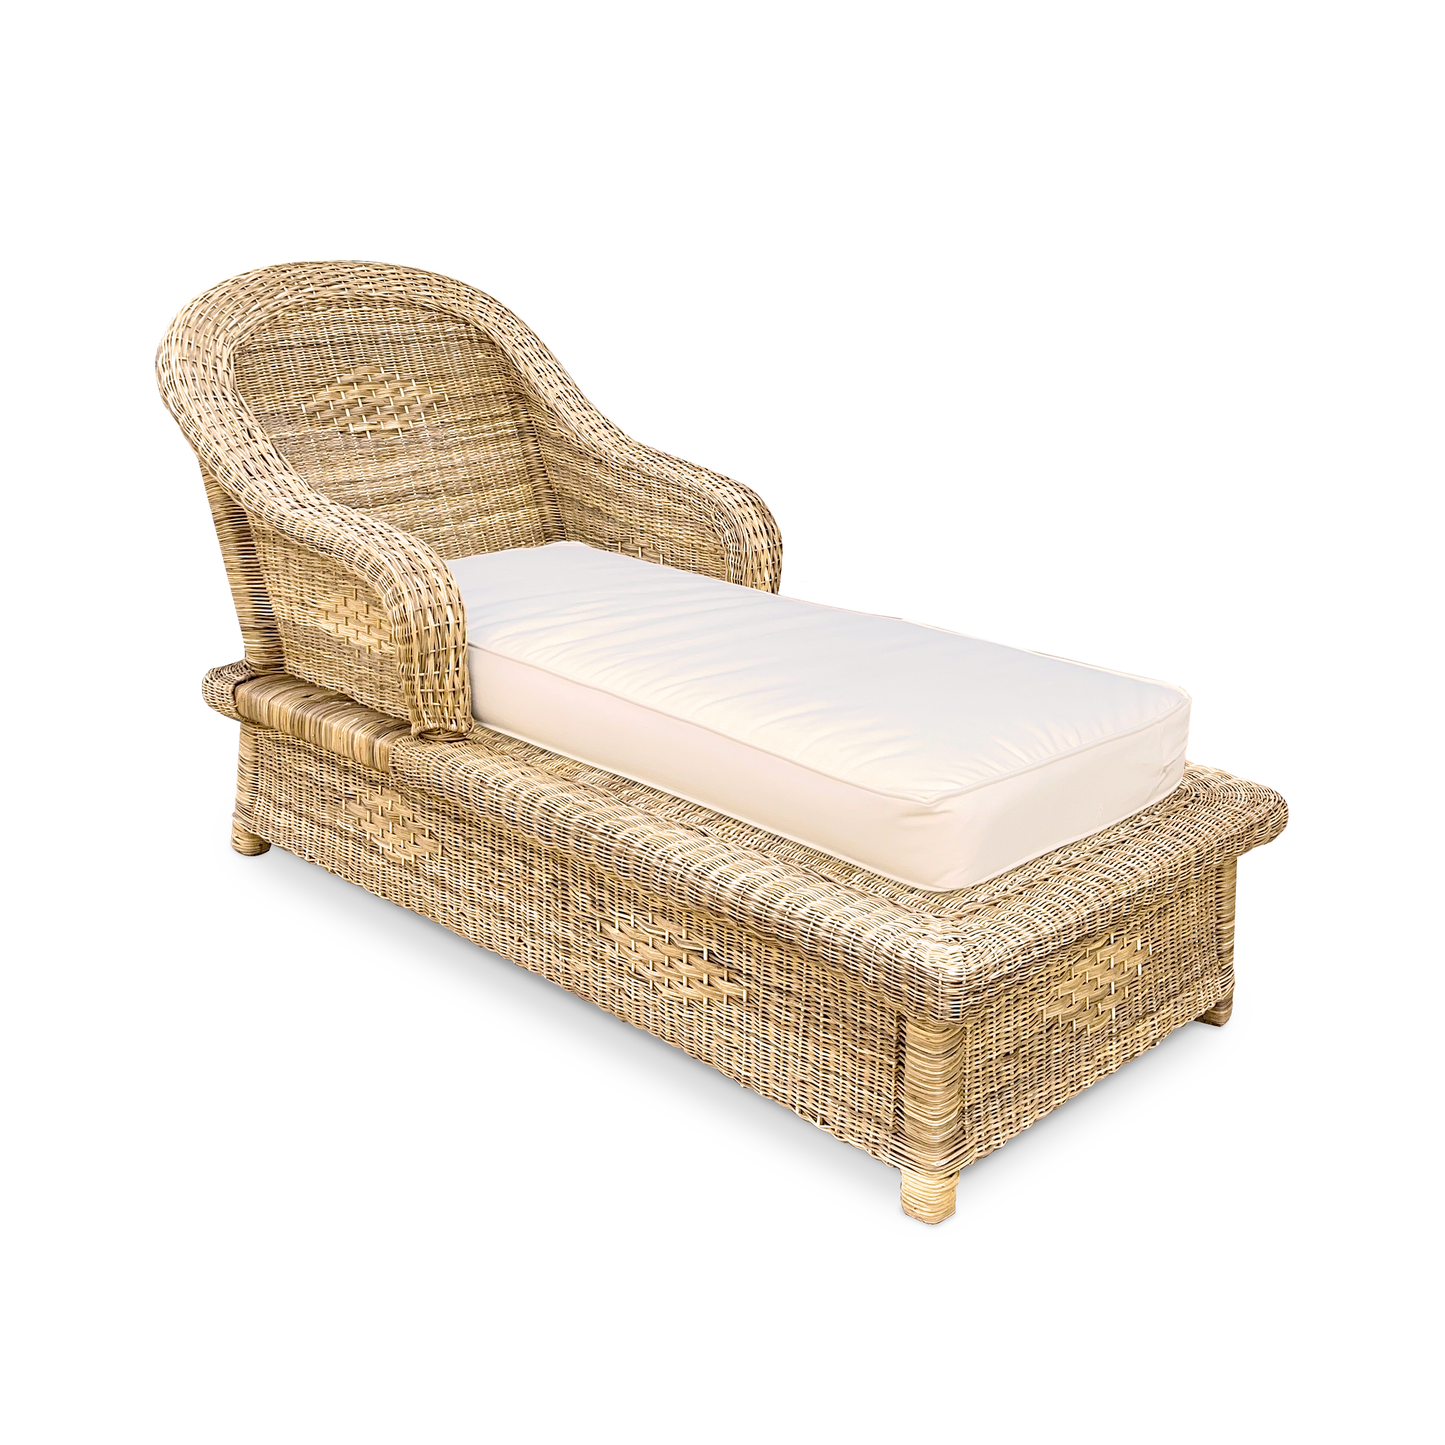 Malawi Classic Lounger - Cushion handmade highest quality